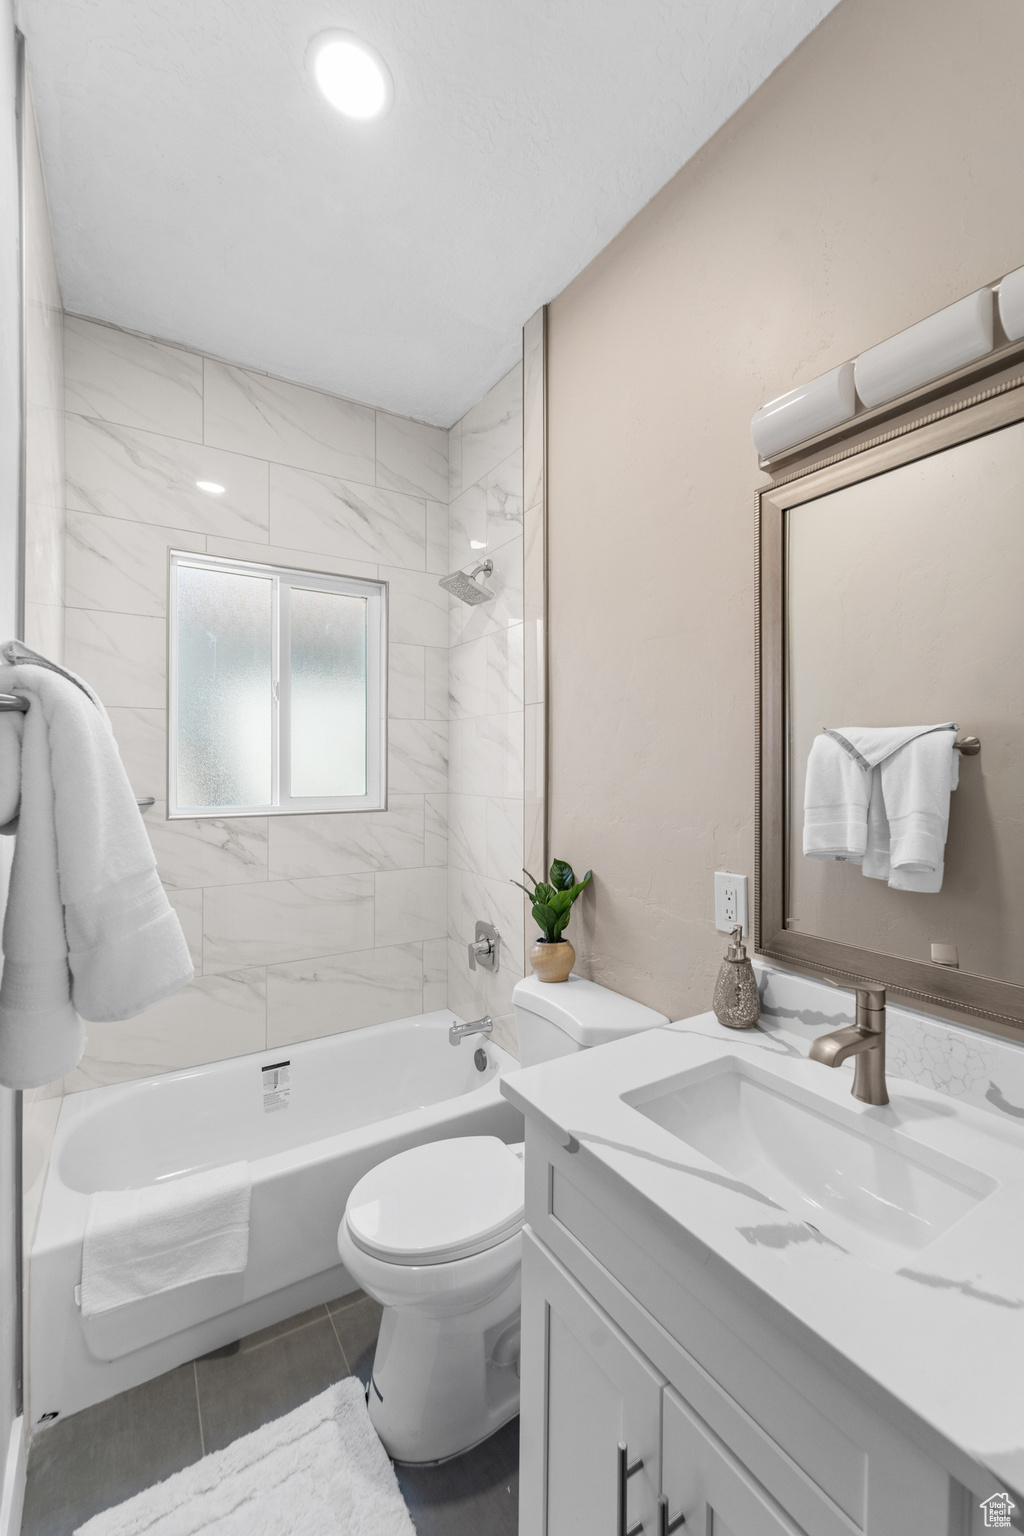 Full bathroom featuring tiled shower / bath combo, vanity, toilet, and tile flooring